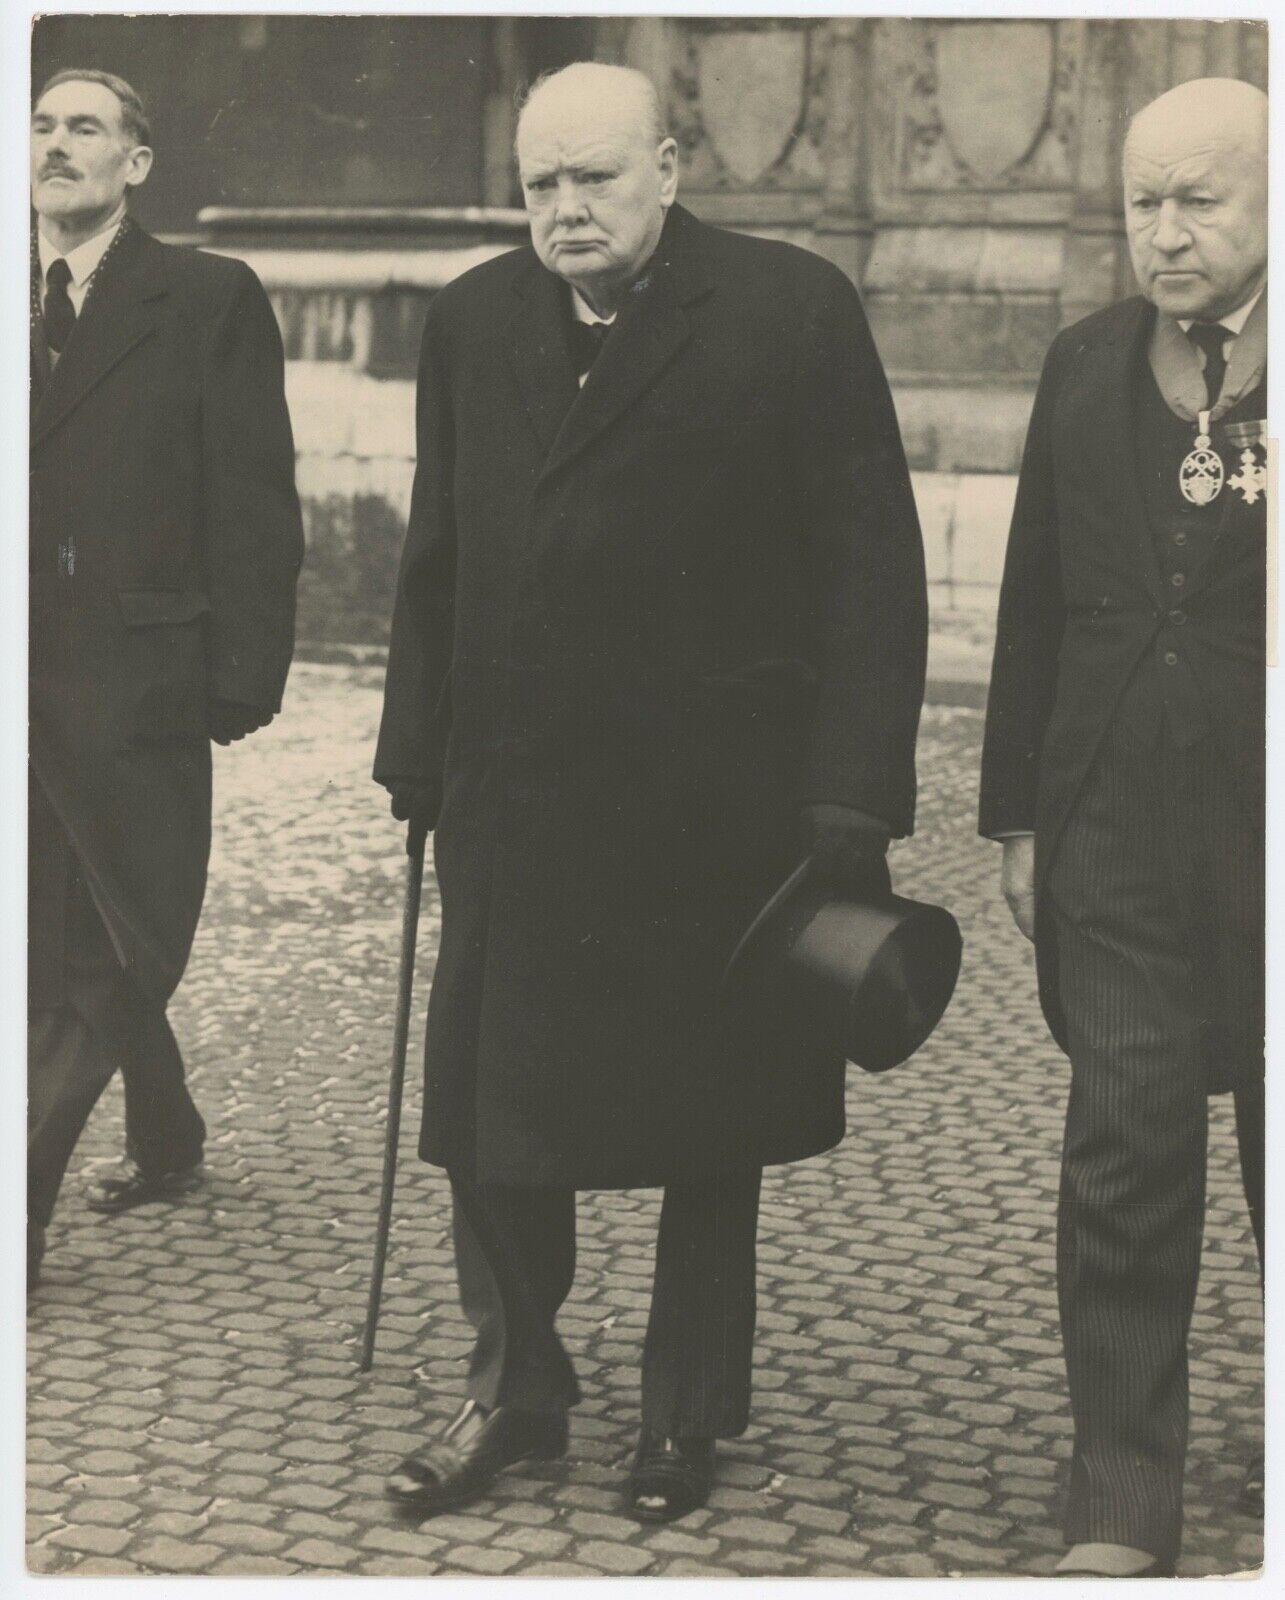 21 February 1956 press photo of Winston S. Churchill at Hugh Tranchard's funeral